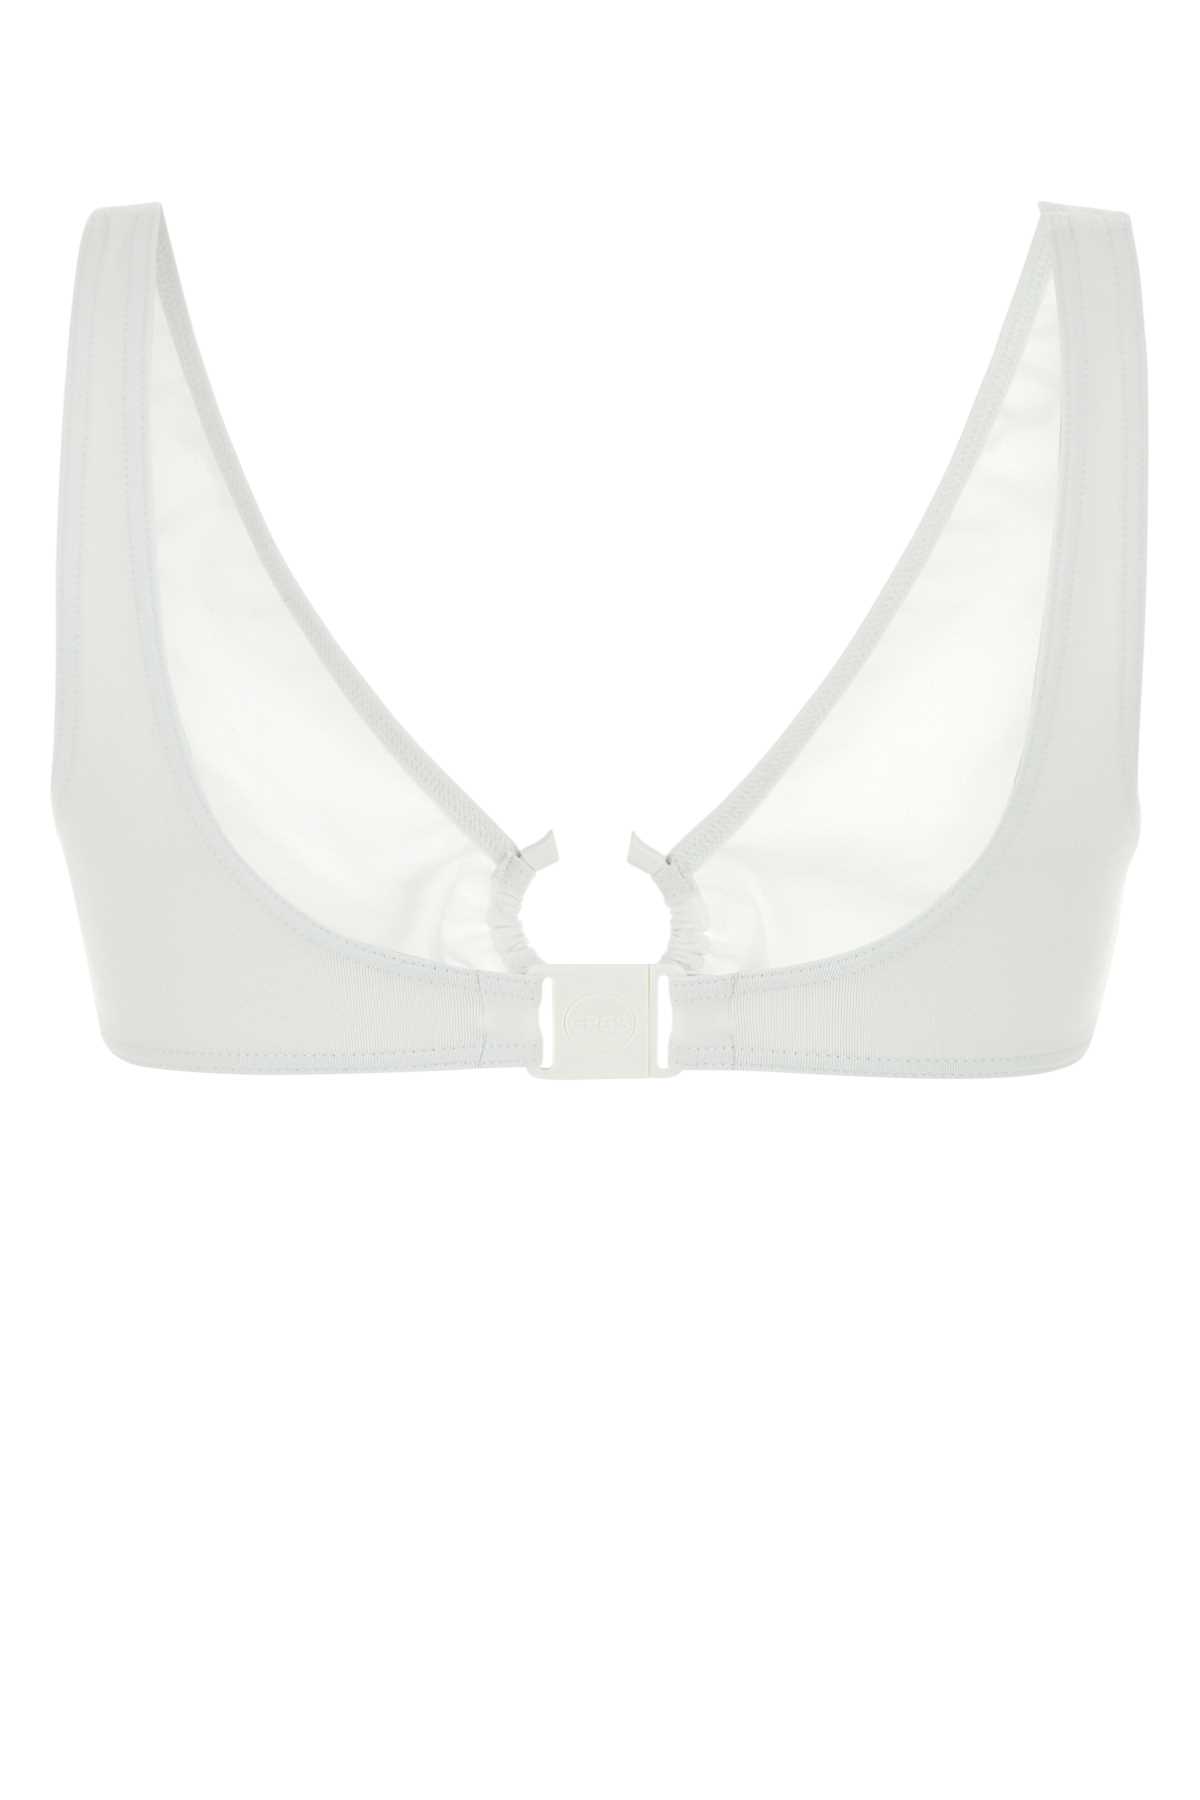 Chloé White Stretch Nylon Papeete Chloã© X Eres Bikini Top In Iconicmilk